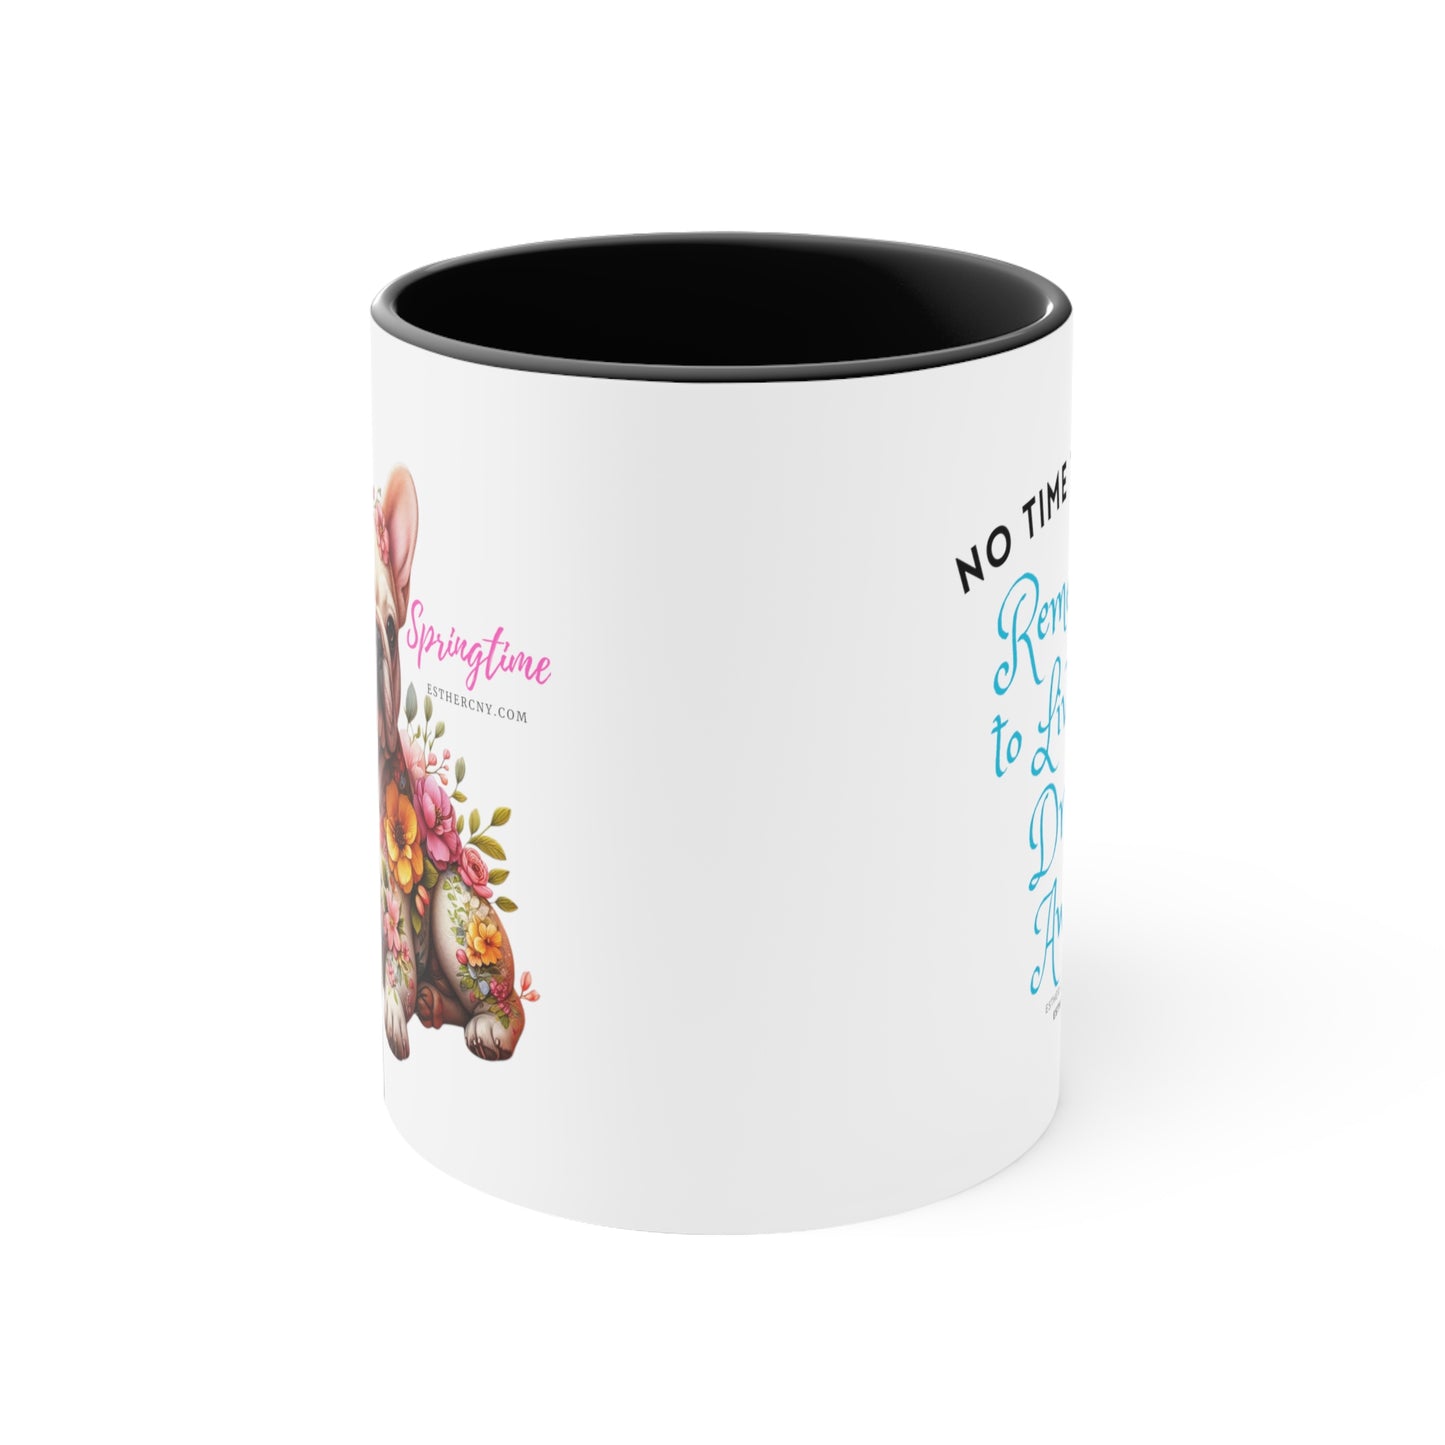 Springtime French Bulldog Accent Coffee Mug, 11oz